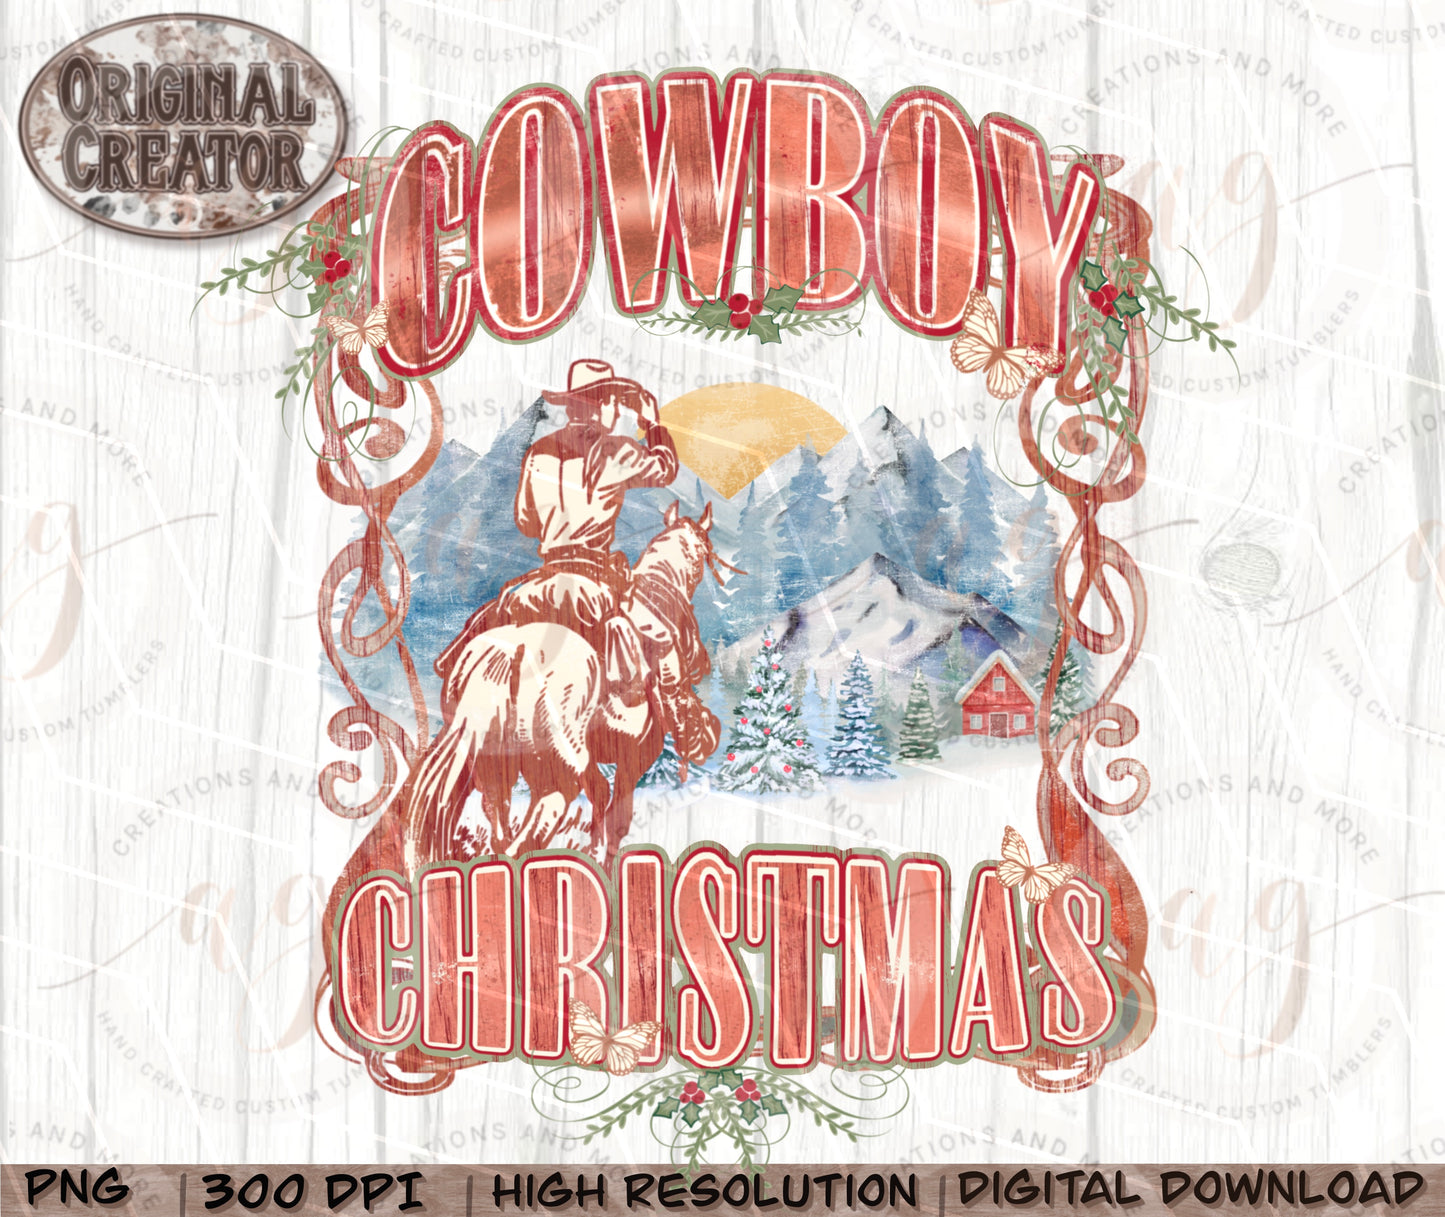 Western Cowboy Christmas file